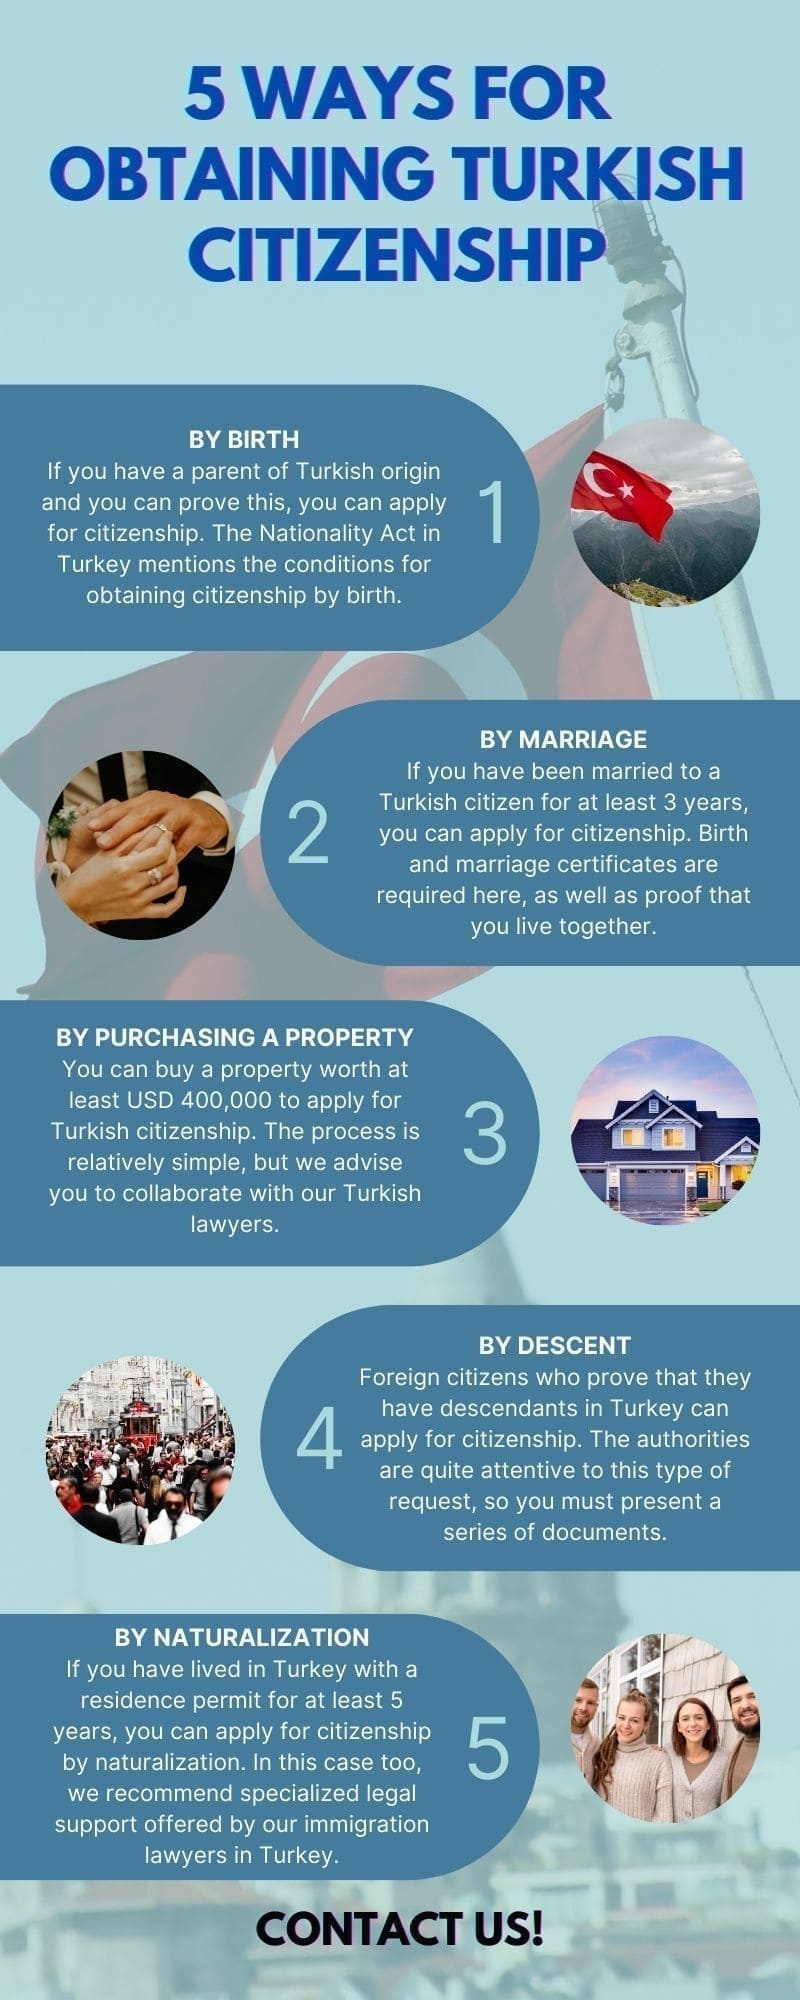 5 Ways for obtaining Turkish citizenship